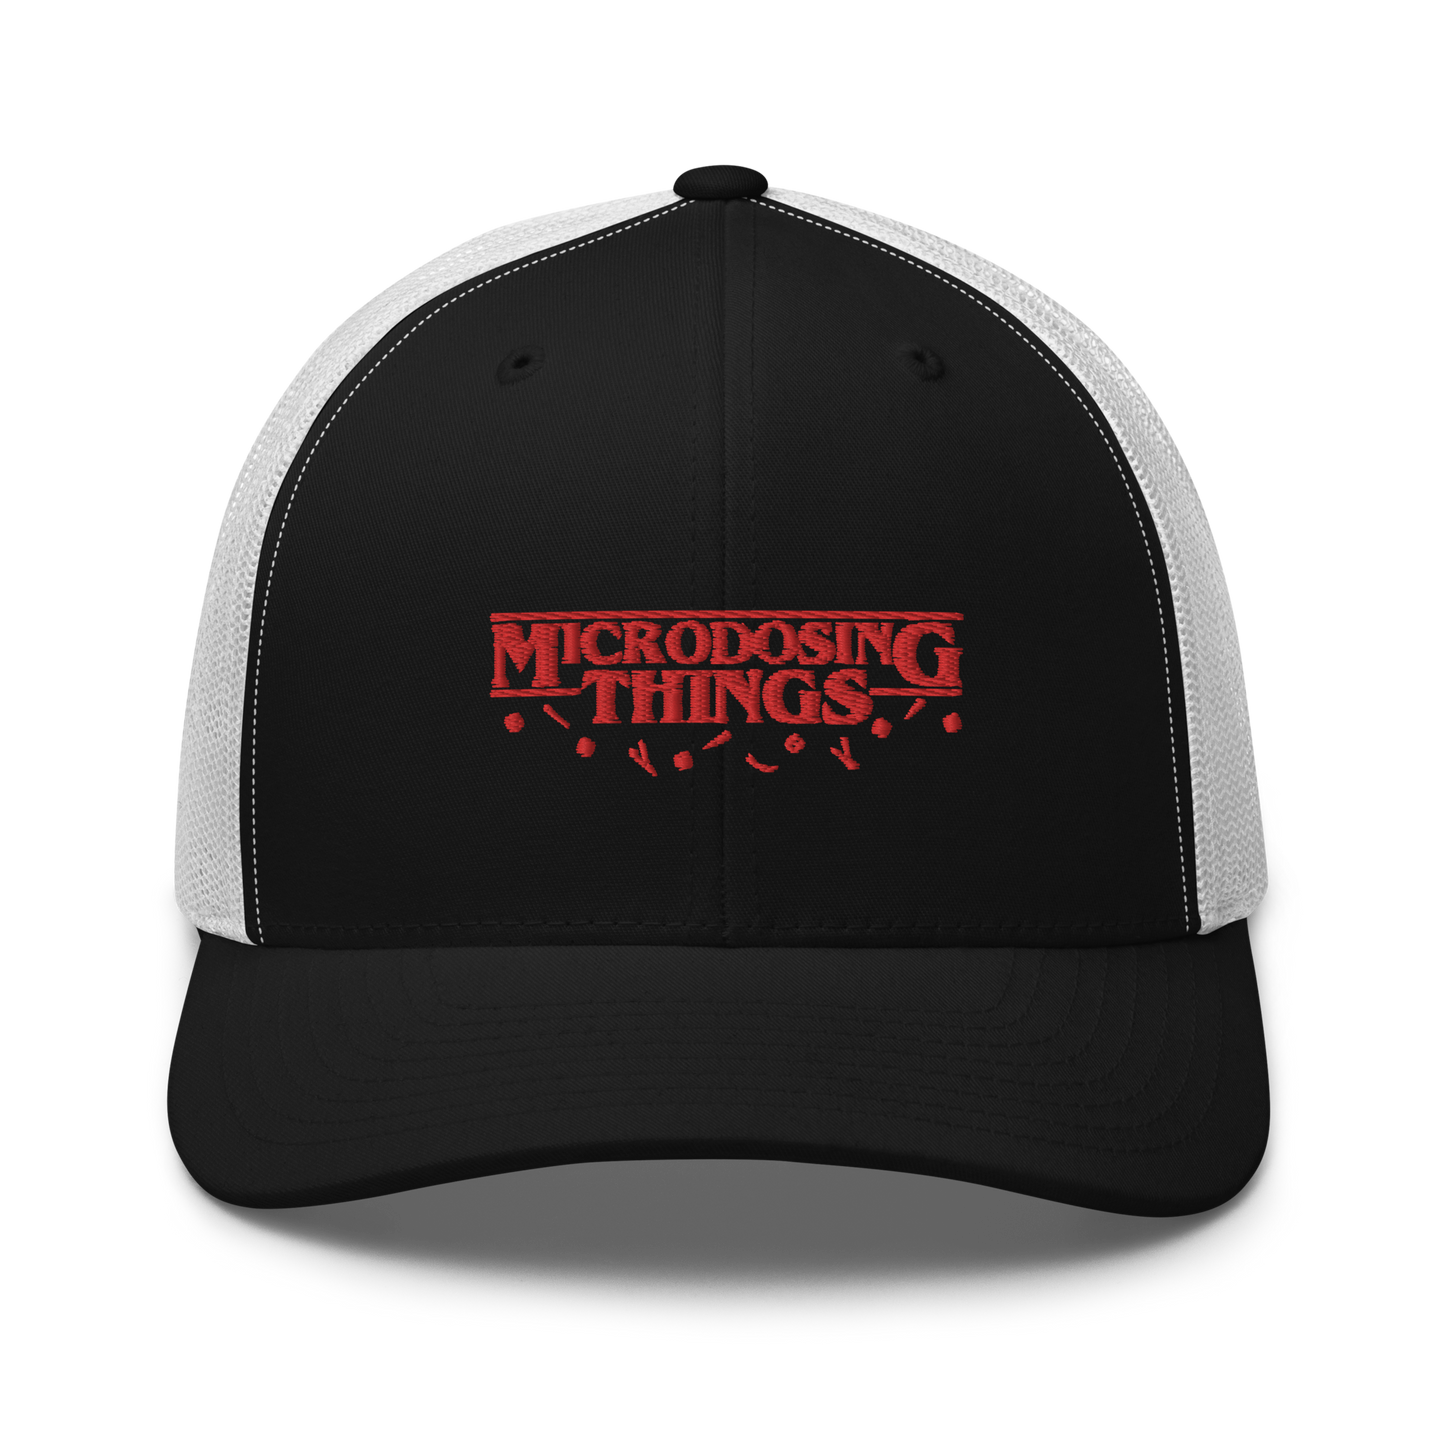 Microdosing Things Trucker Hat